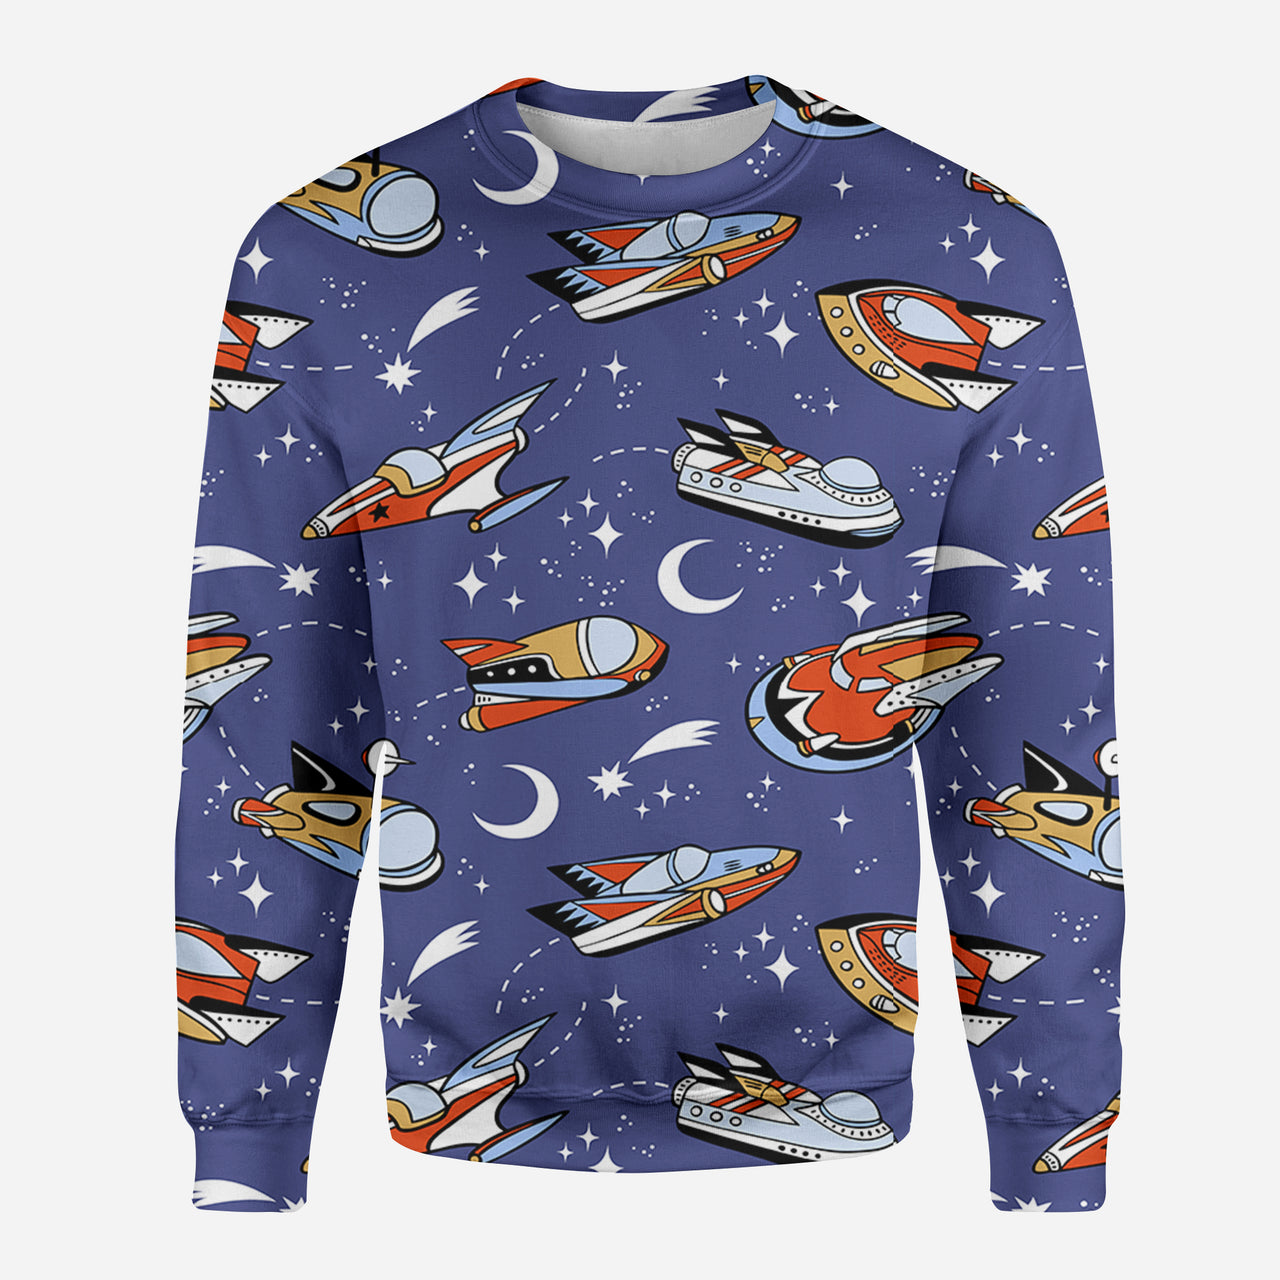 Spaceship & Stars Designed 3D Sweatshirts